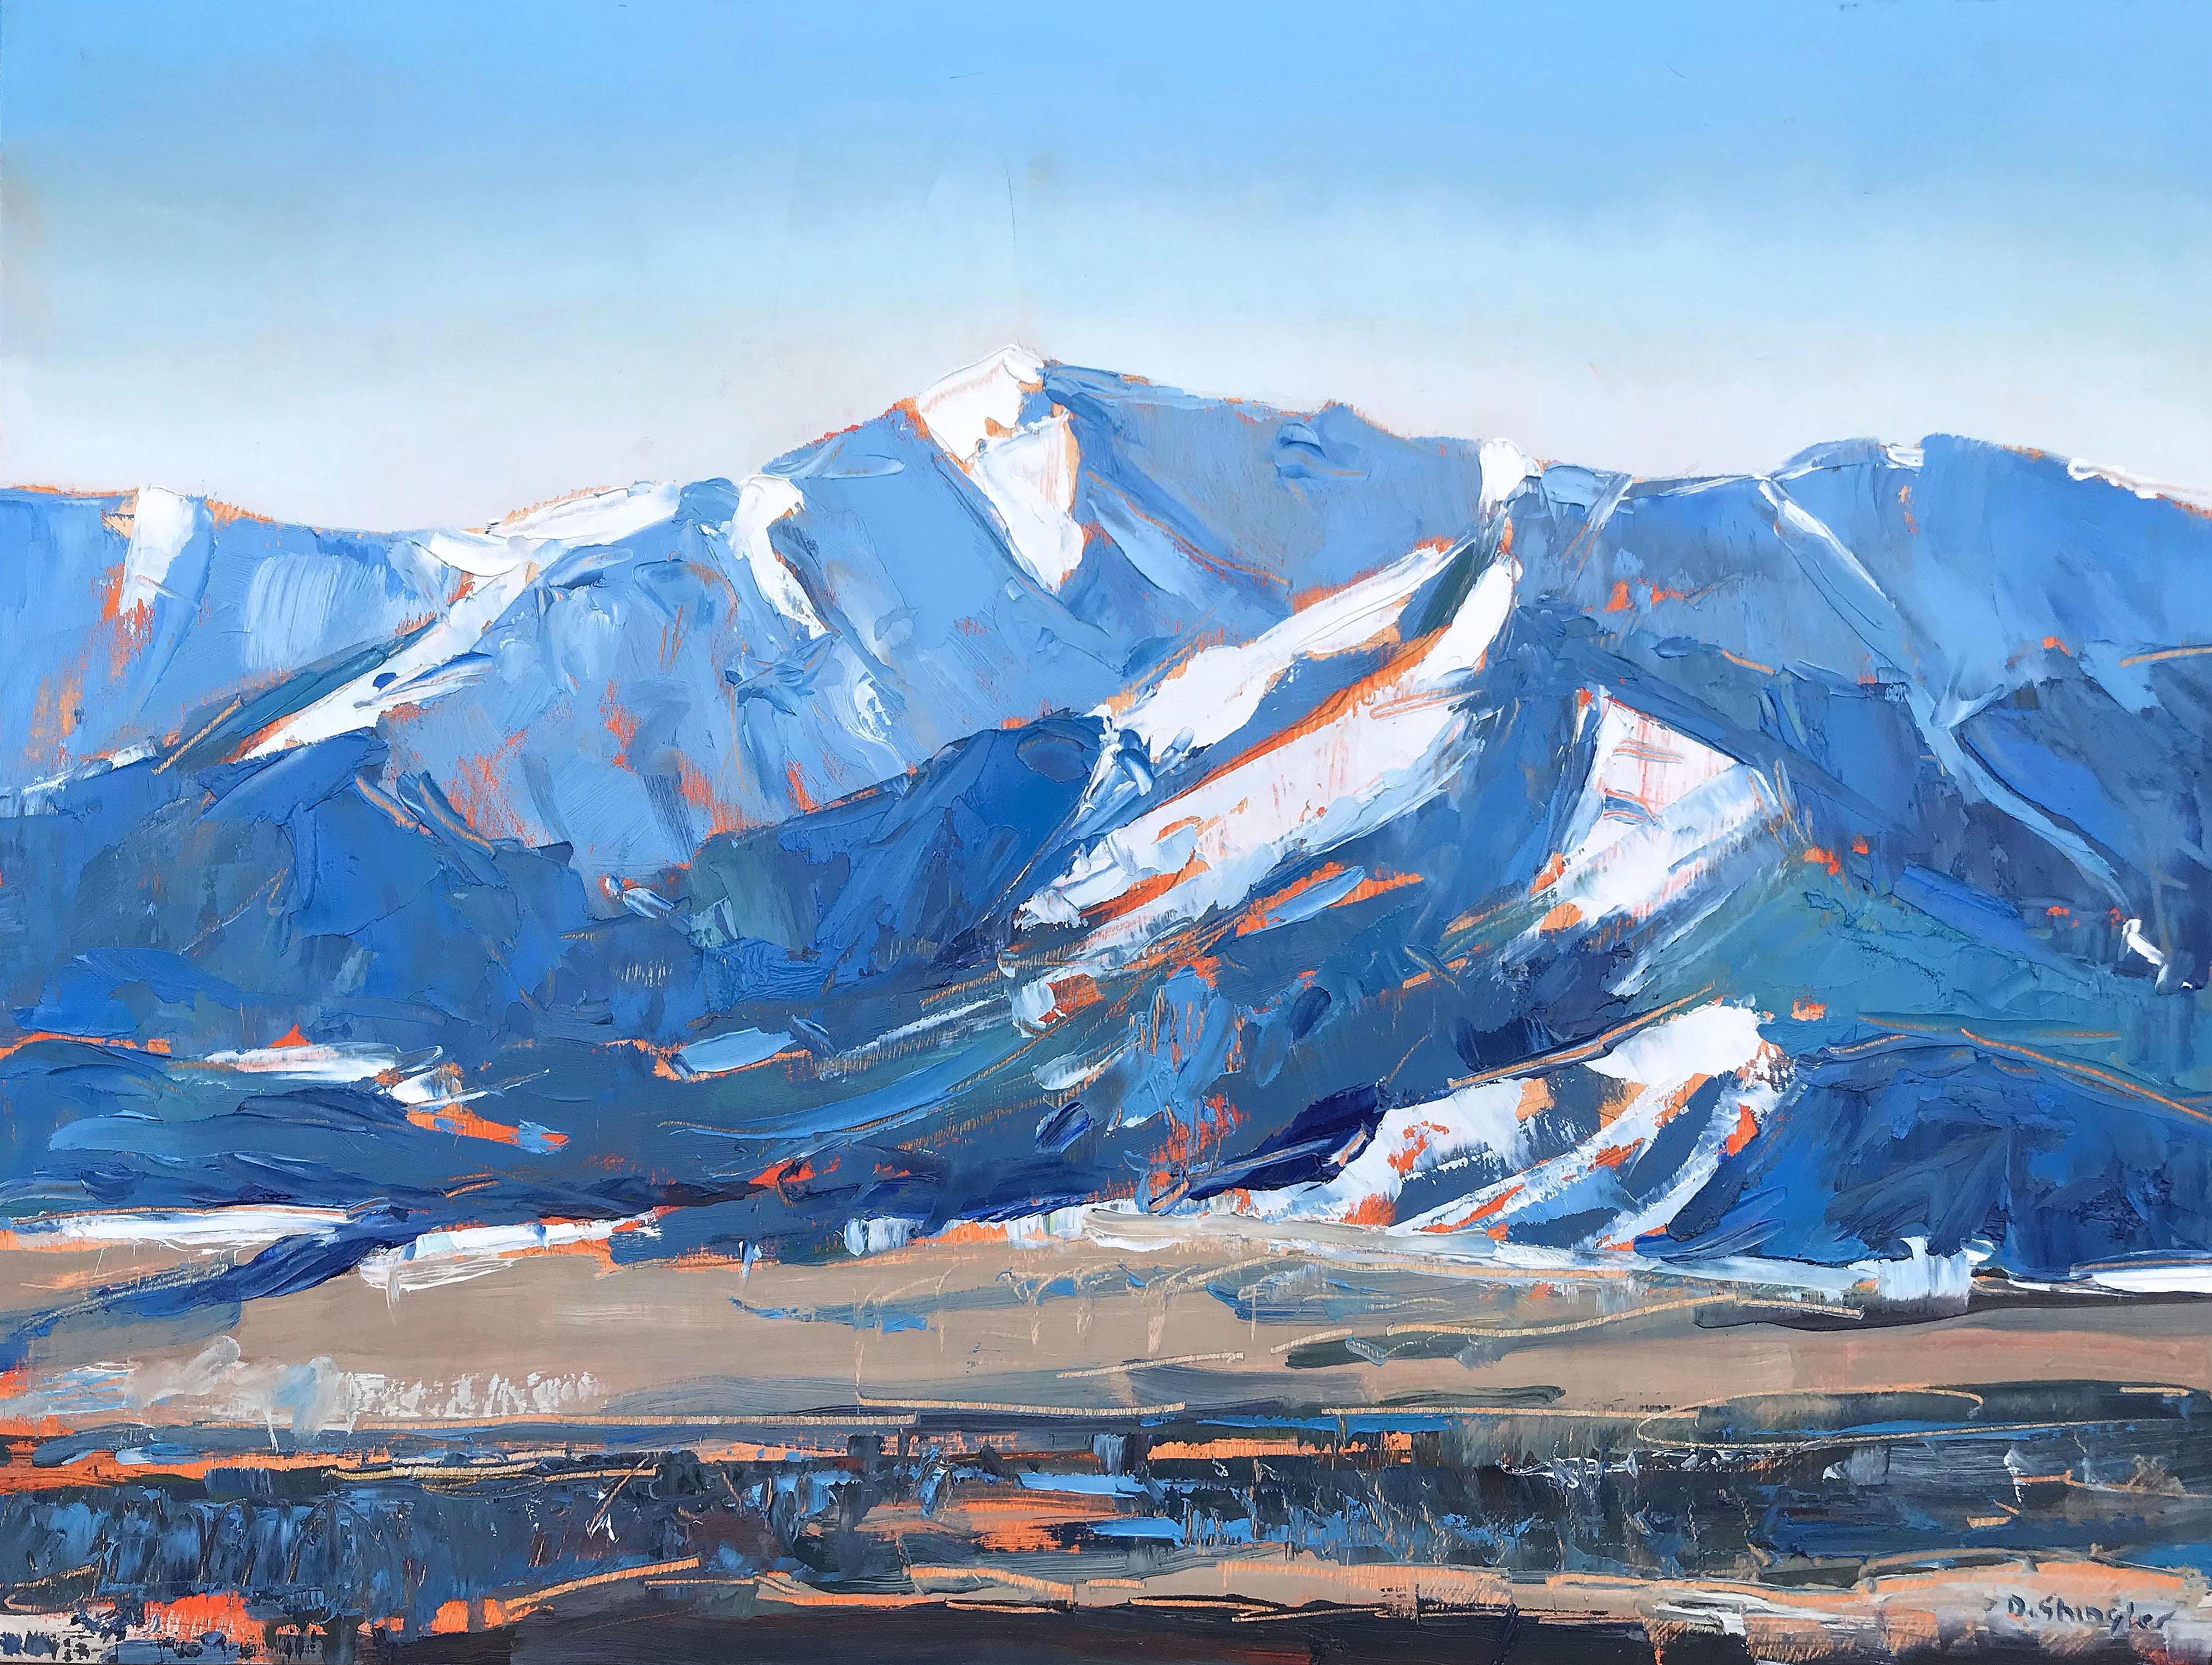 David Shingler Figurative Painting - "Sangre De Cristo Range, Salida Colorado" Oil Painting